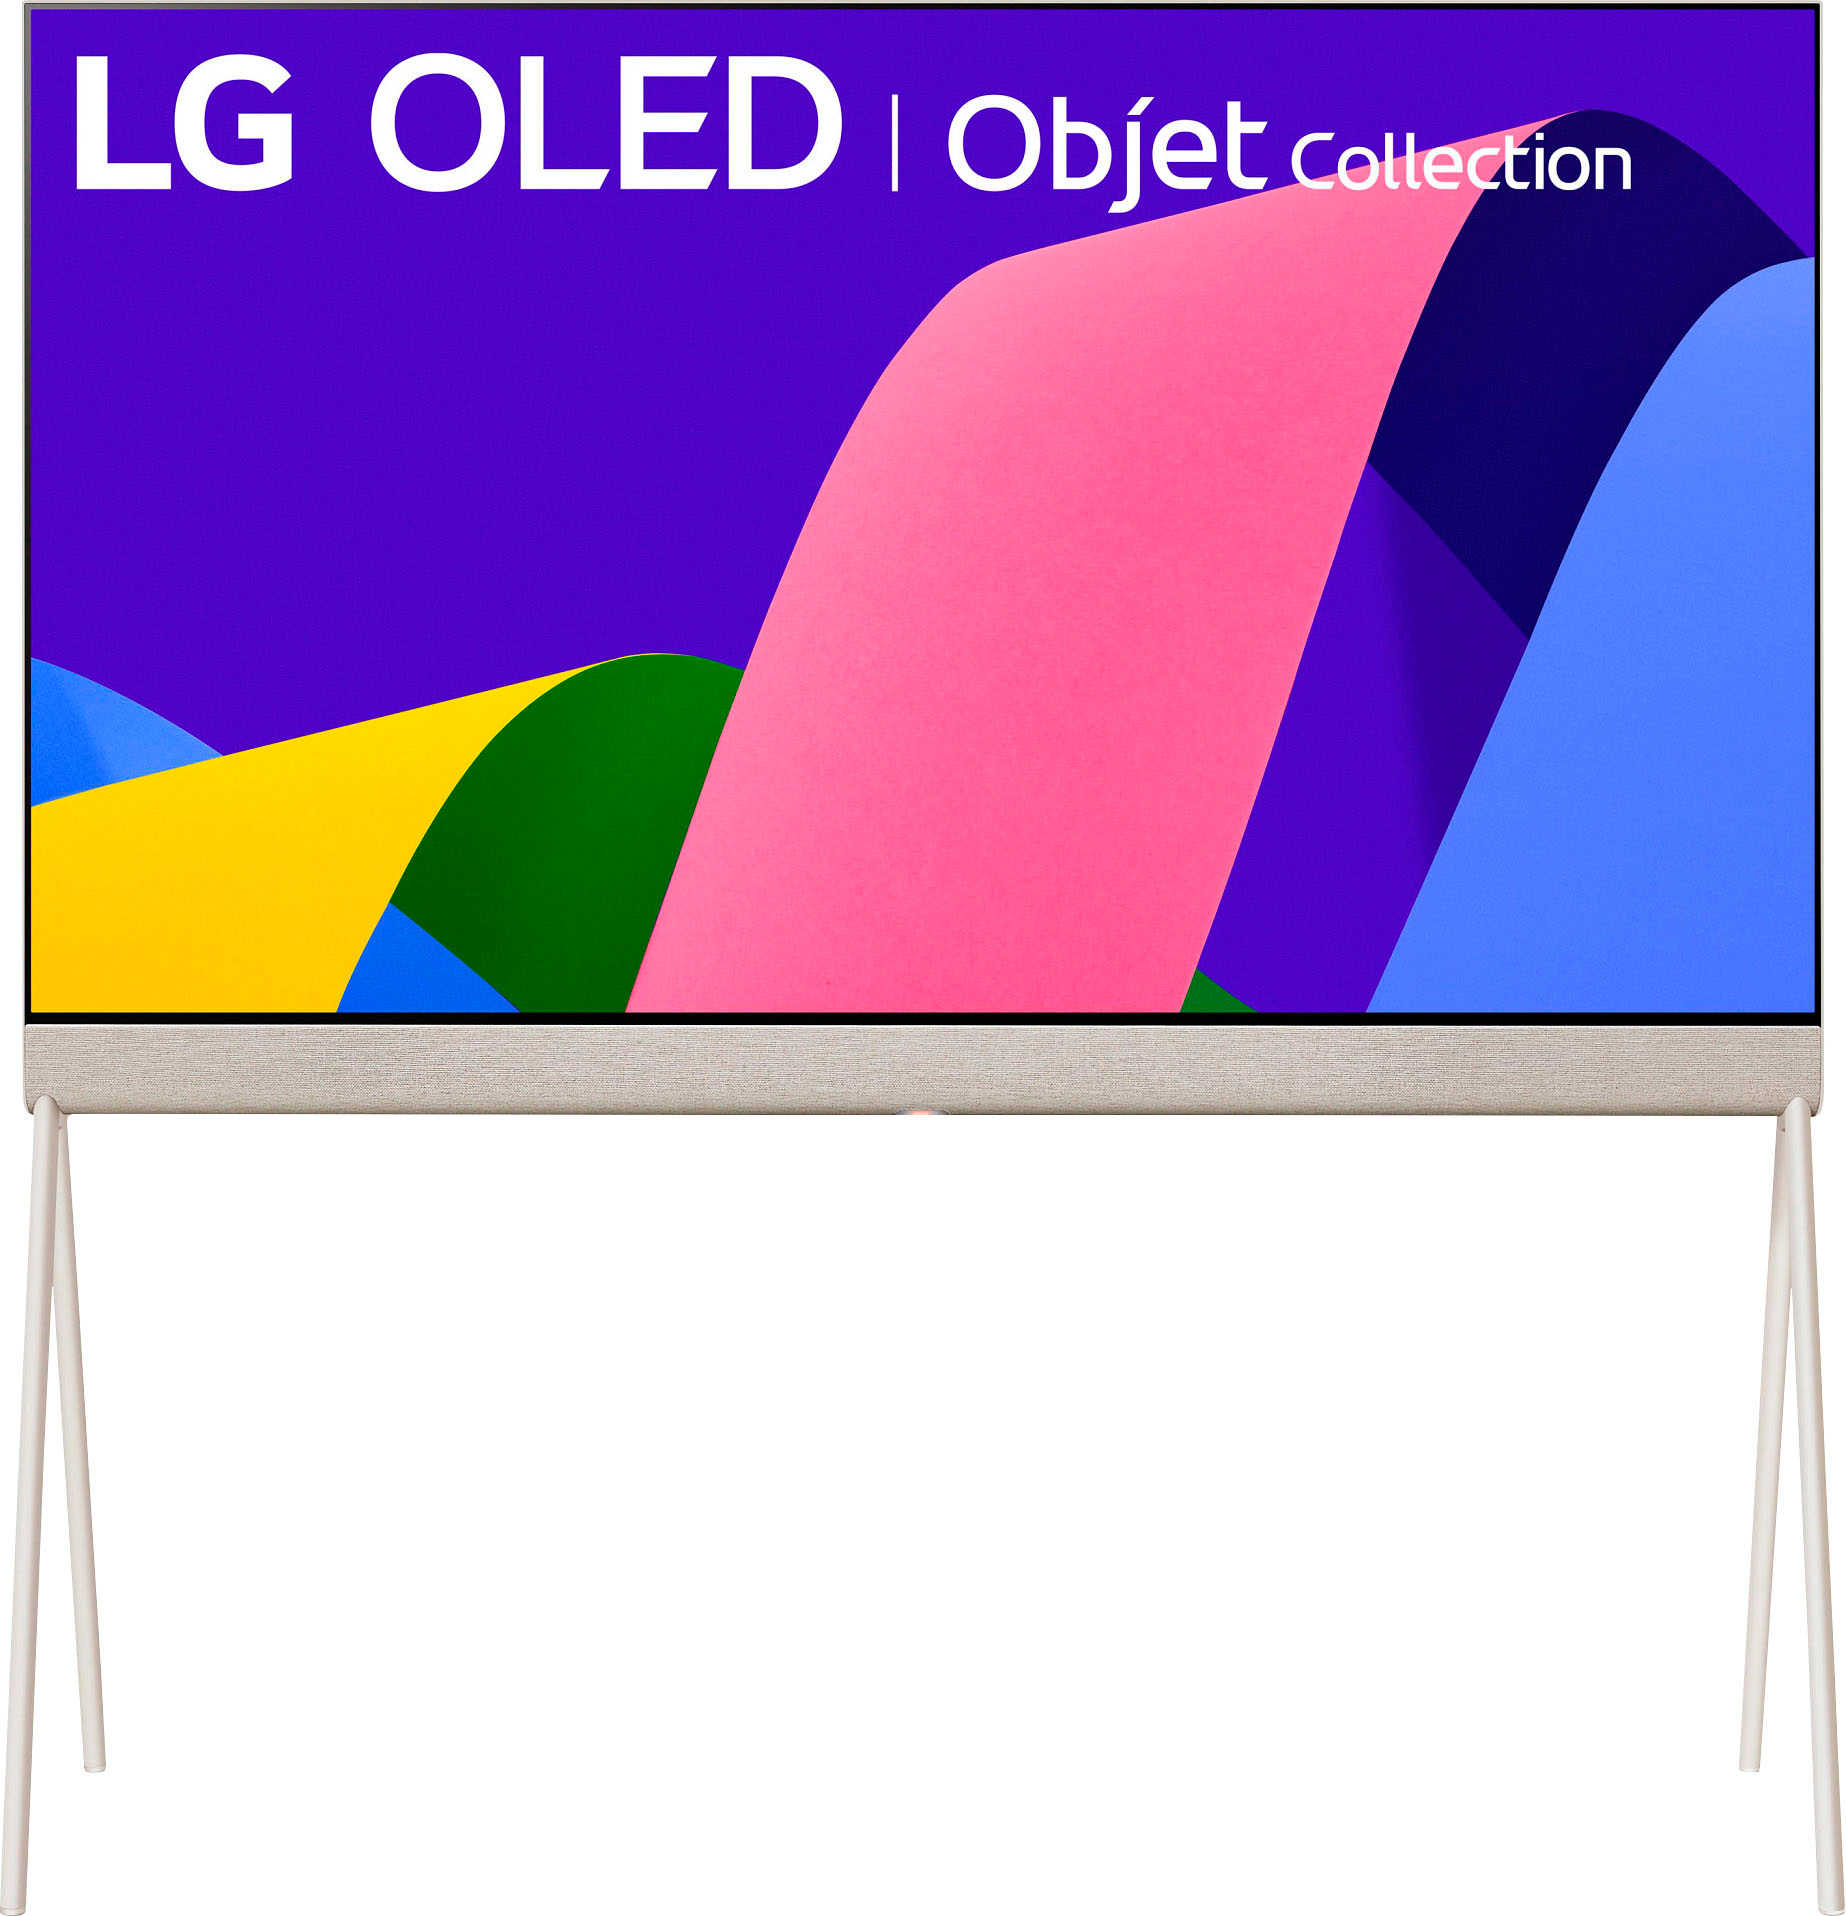 LG 55” Class UP7000 Series LED 4K UHD Smart webOS TV 55UP7000PUA - Best Buy